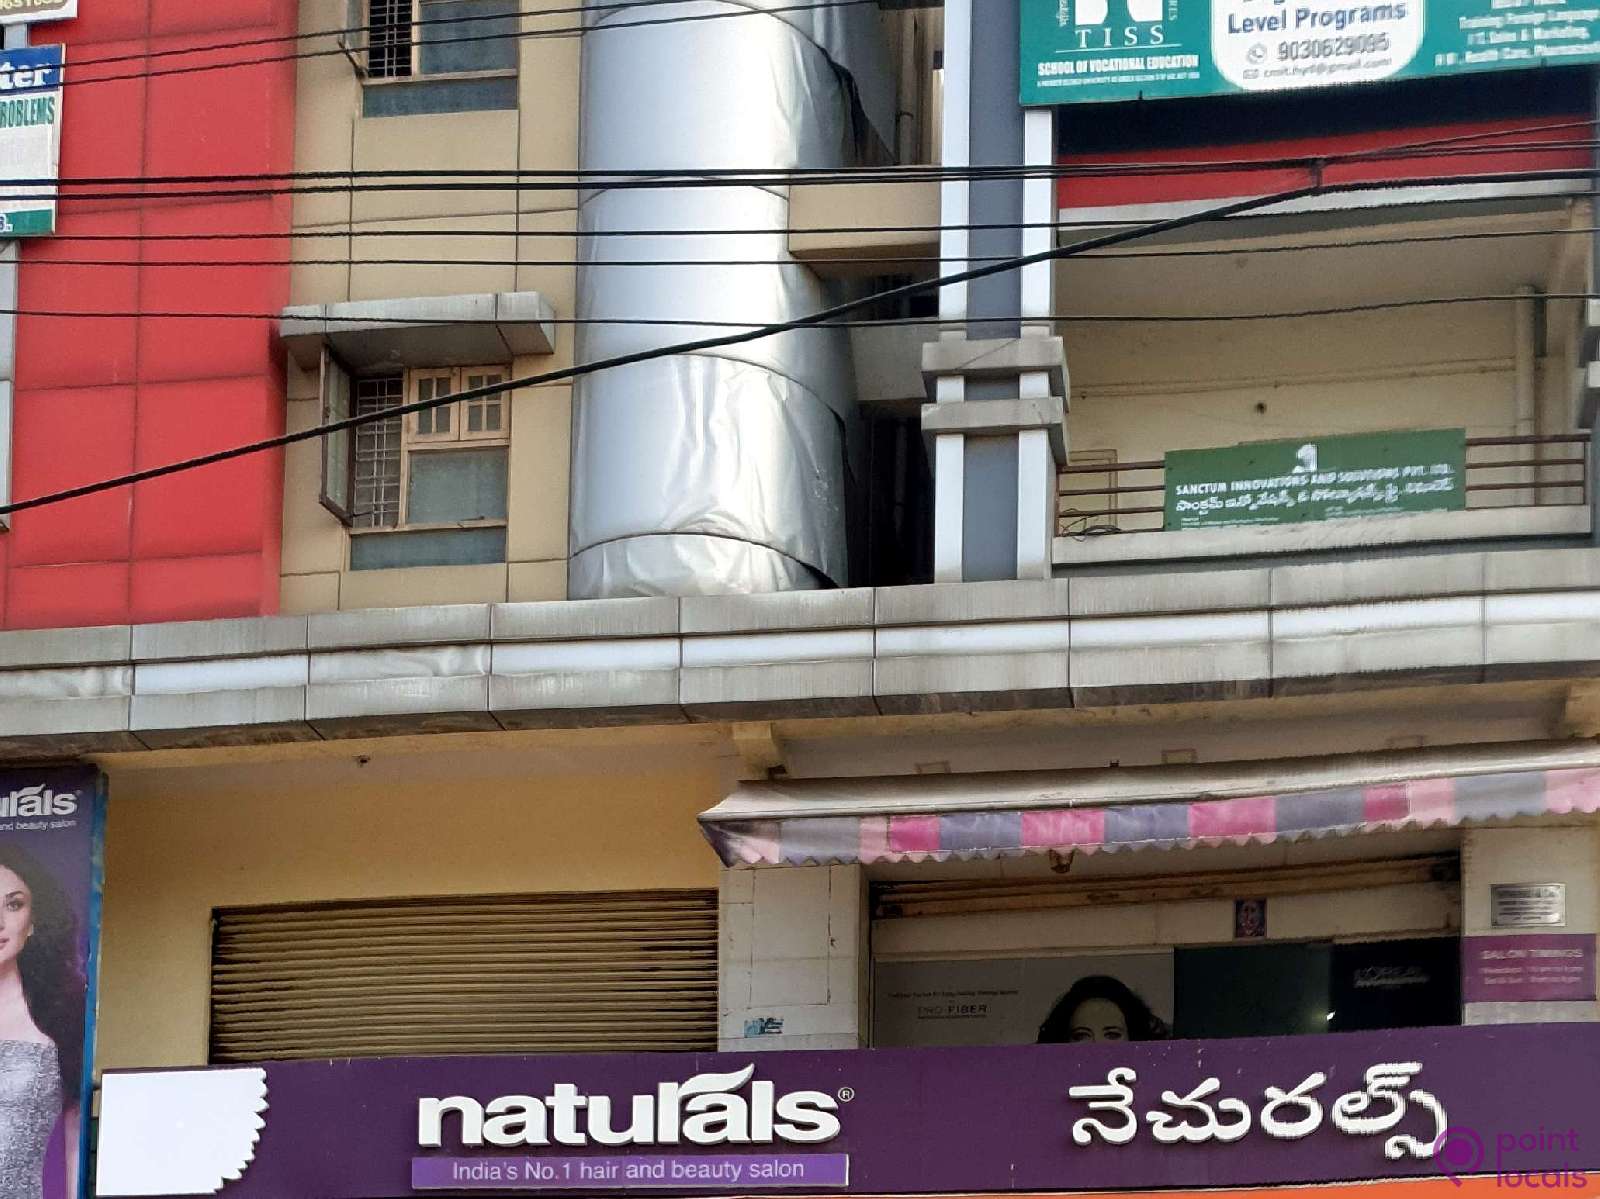 Naturals Salon - Beauty Salon in Hyderabad,Telangana | Pointlocals